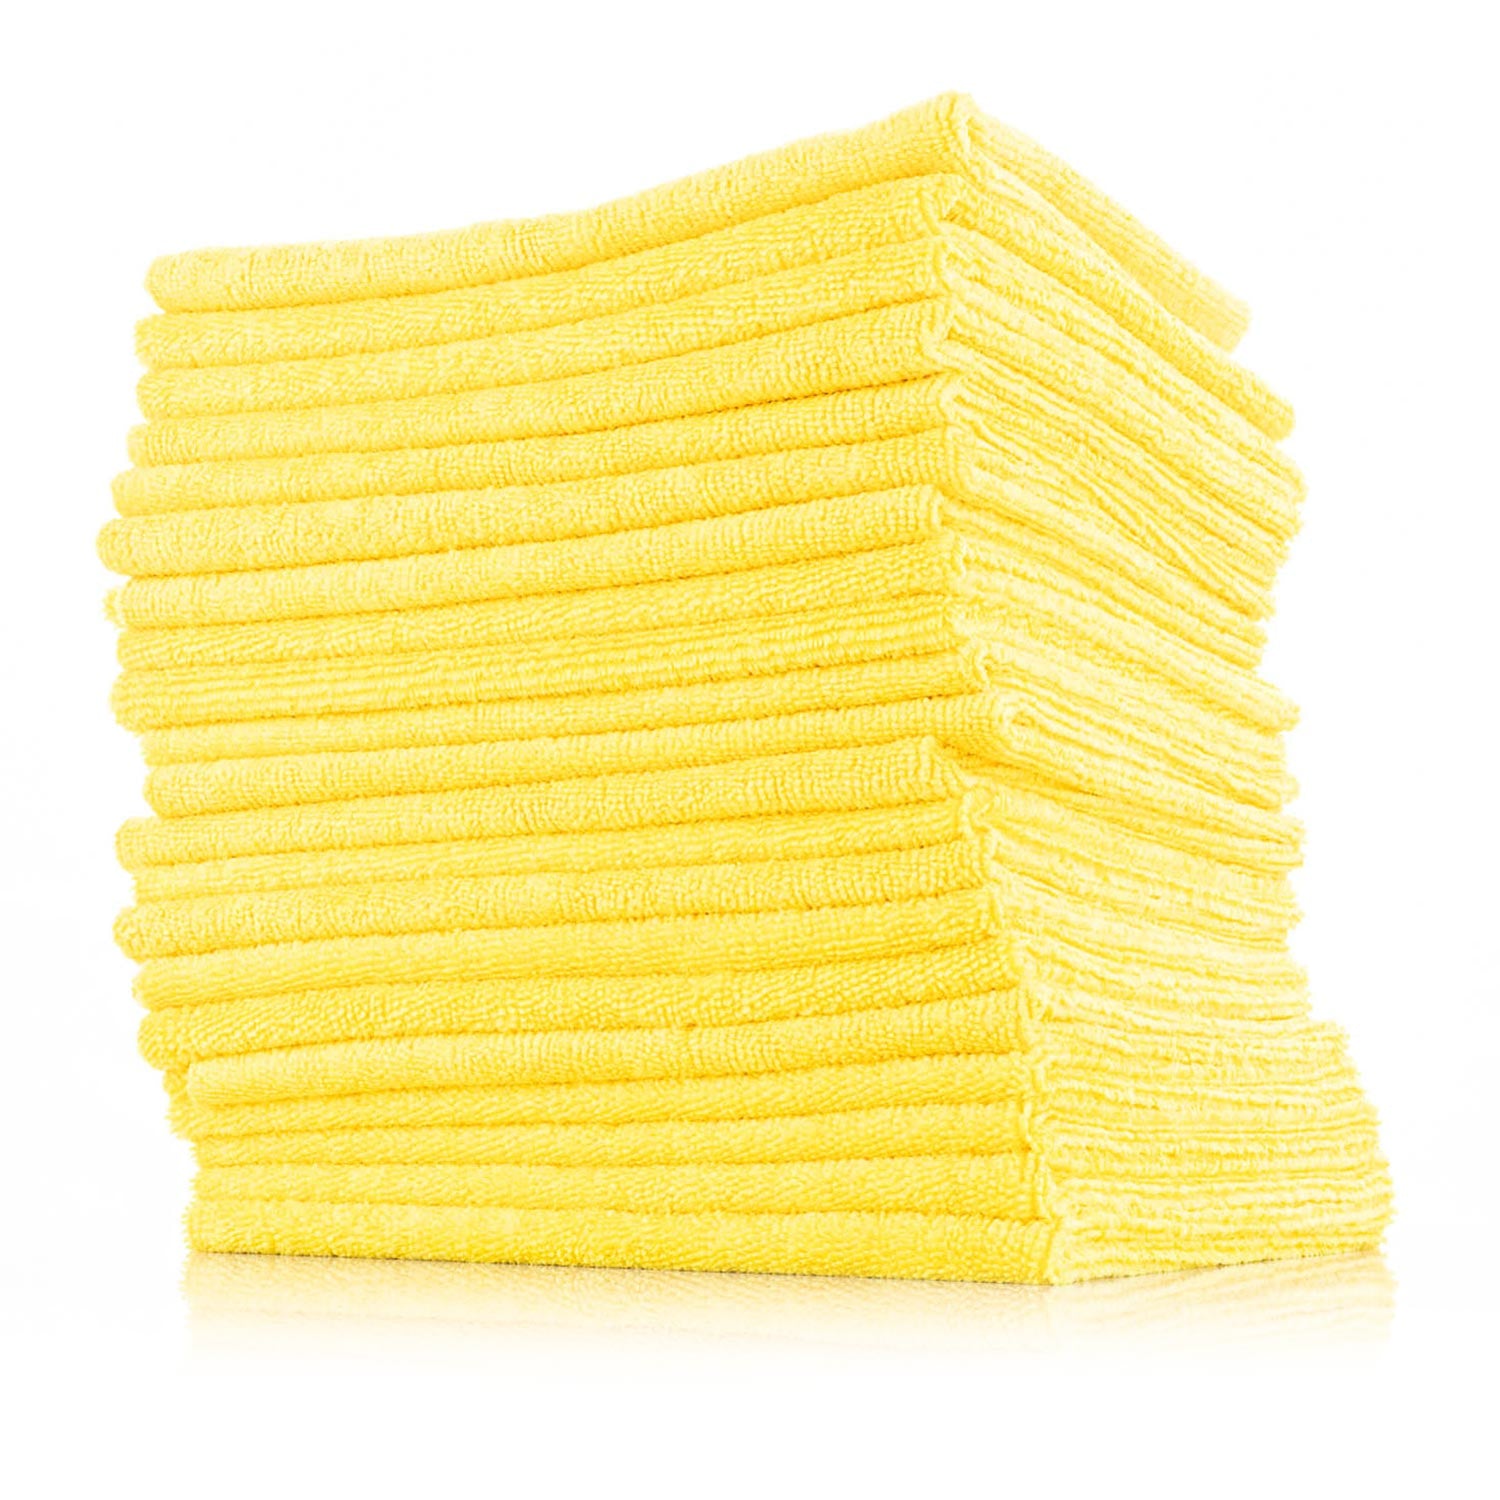 edgeless-microfiber-towels-300-gsm-yellow-20-pack